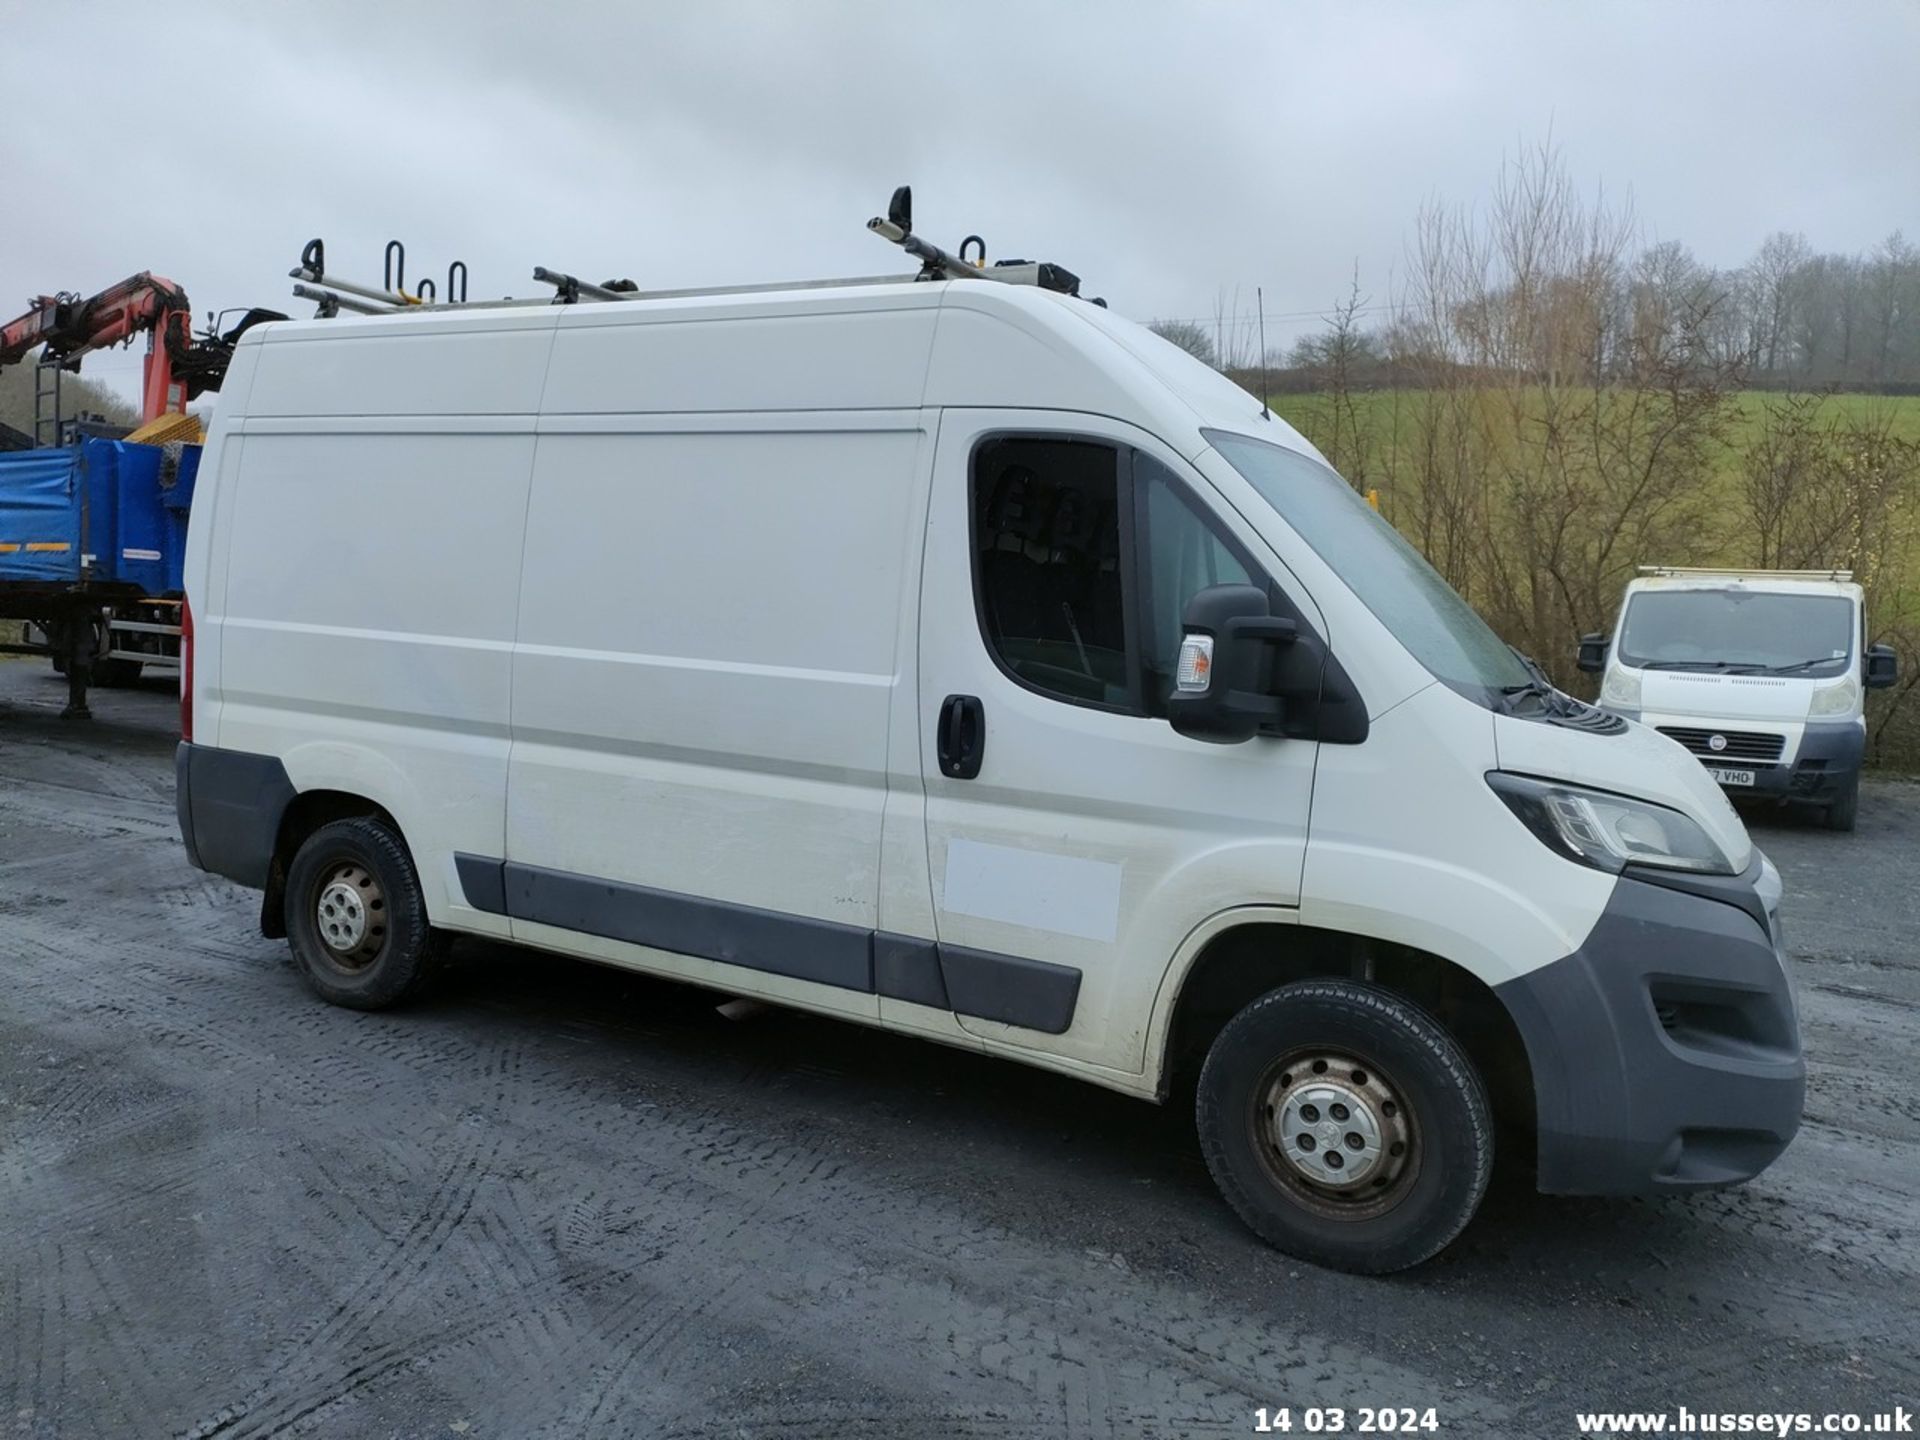 16/16 PEUGEOT BOXER 335 L2H2 HDI - 2198cc 5dr Van (White, 131k) - Image 45 of 62